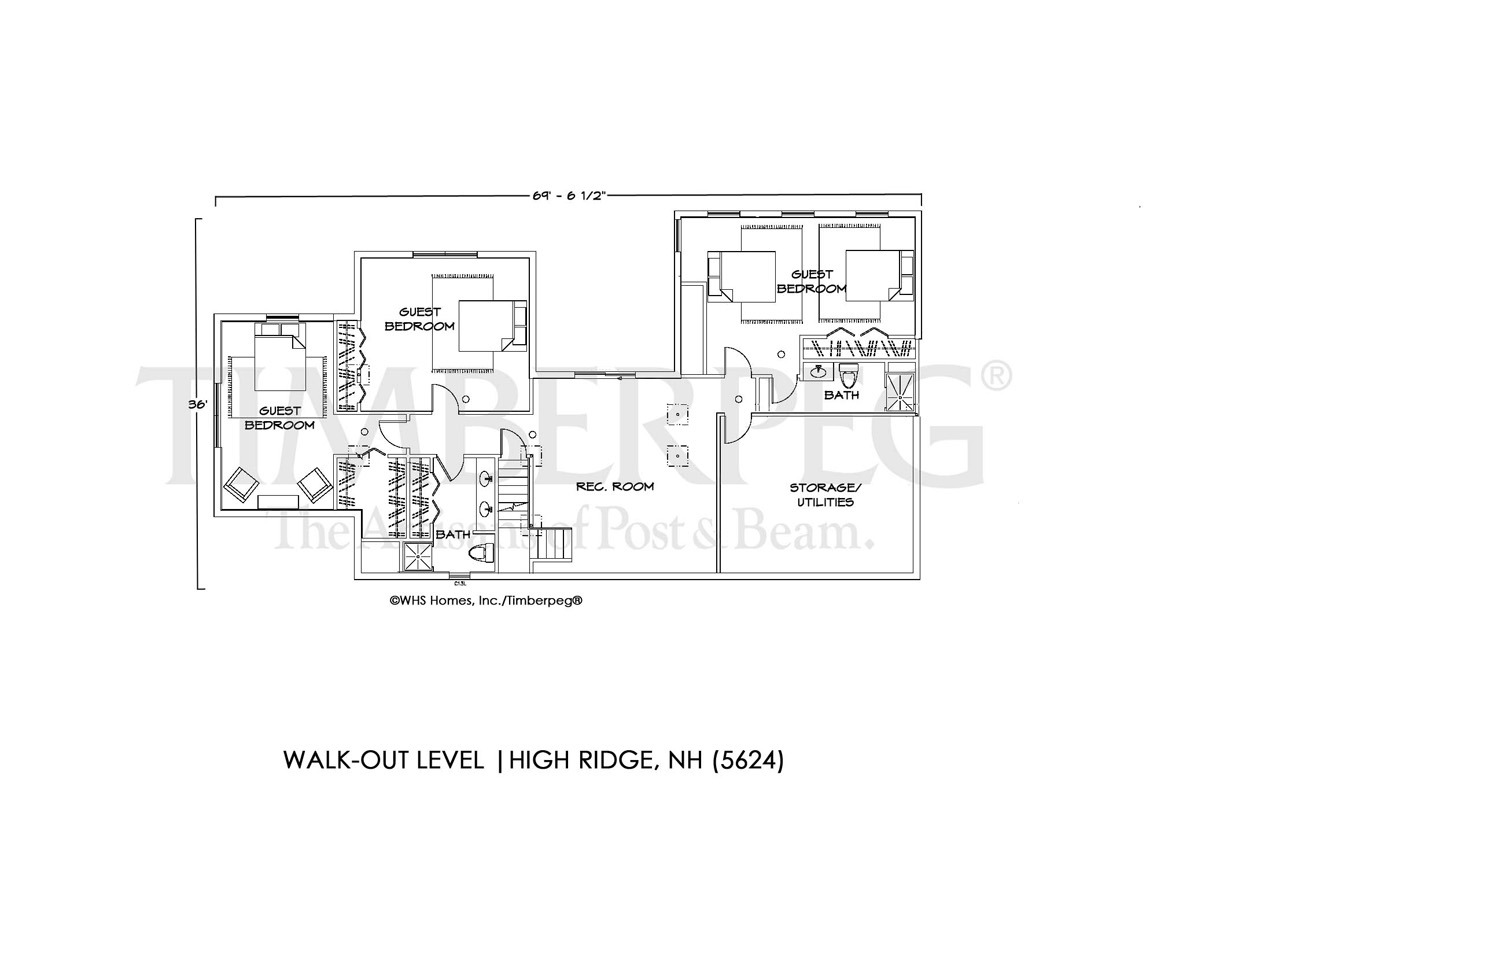 High Ridge, NH Walk-Out Level Floor Plan (5624)